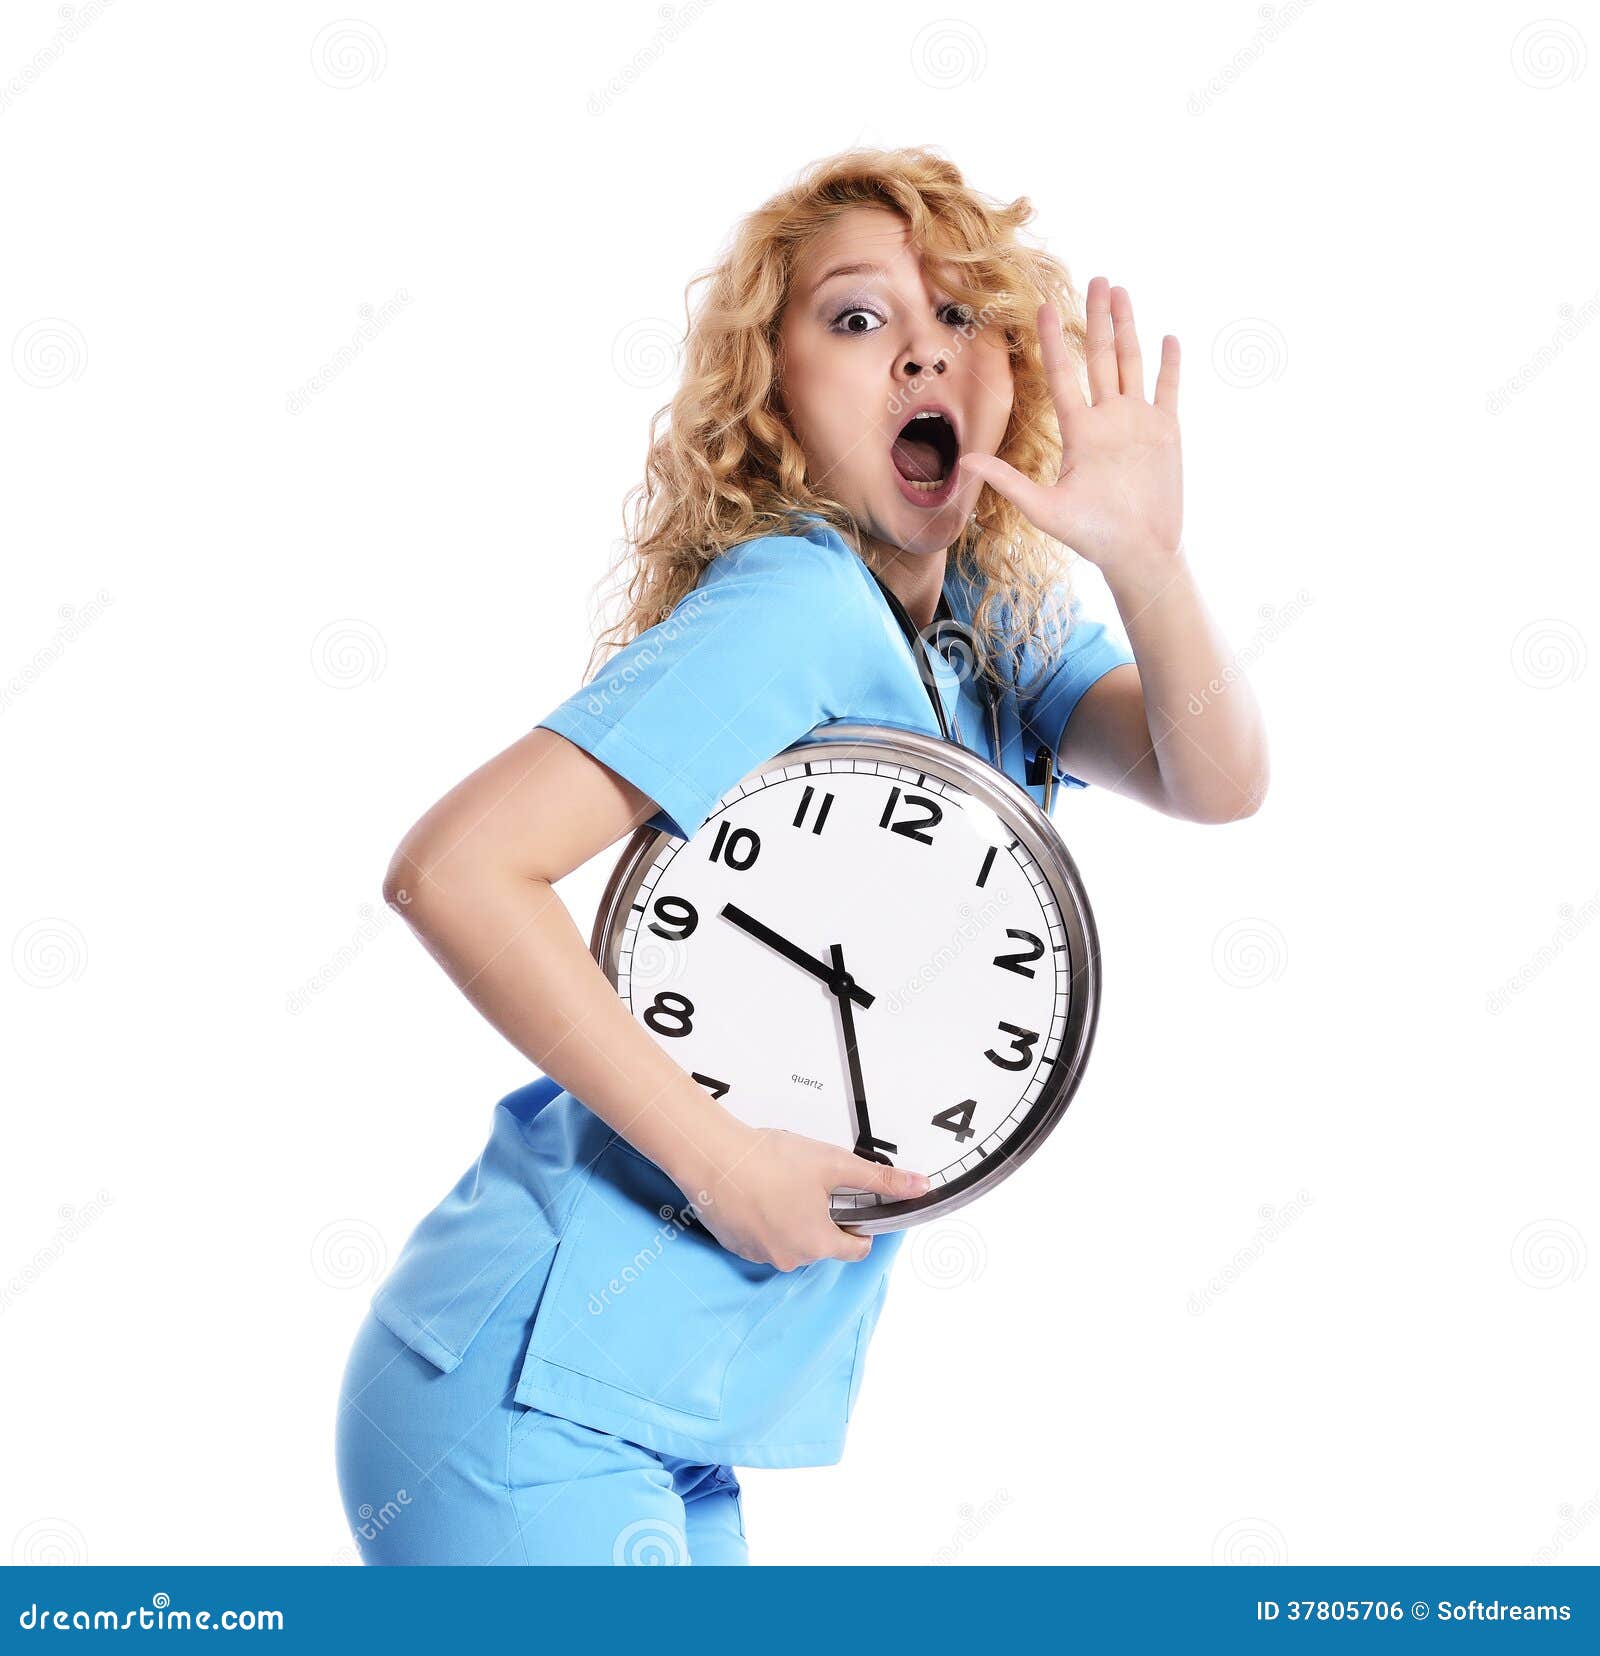 stress - nurse woman running late